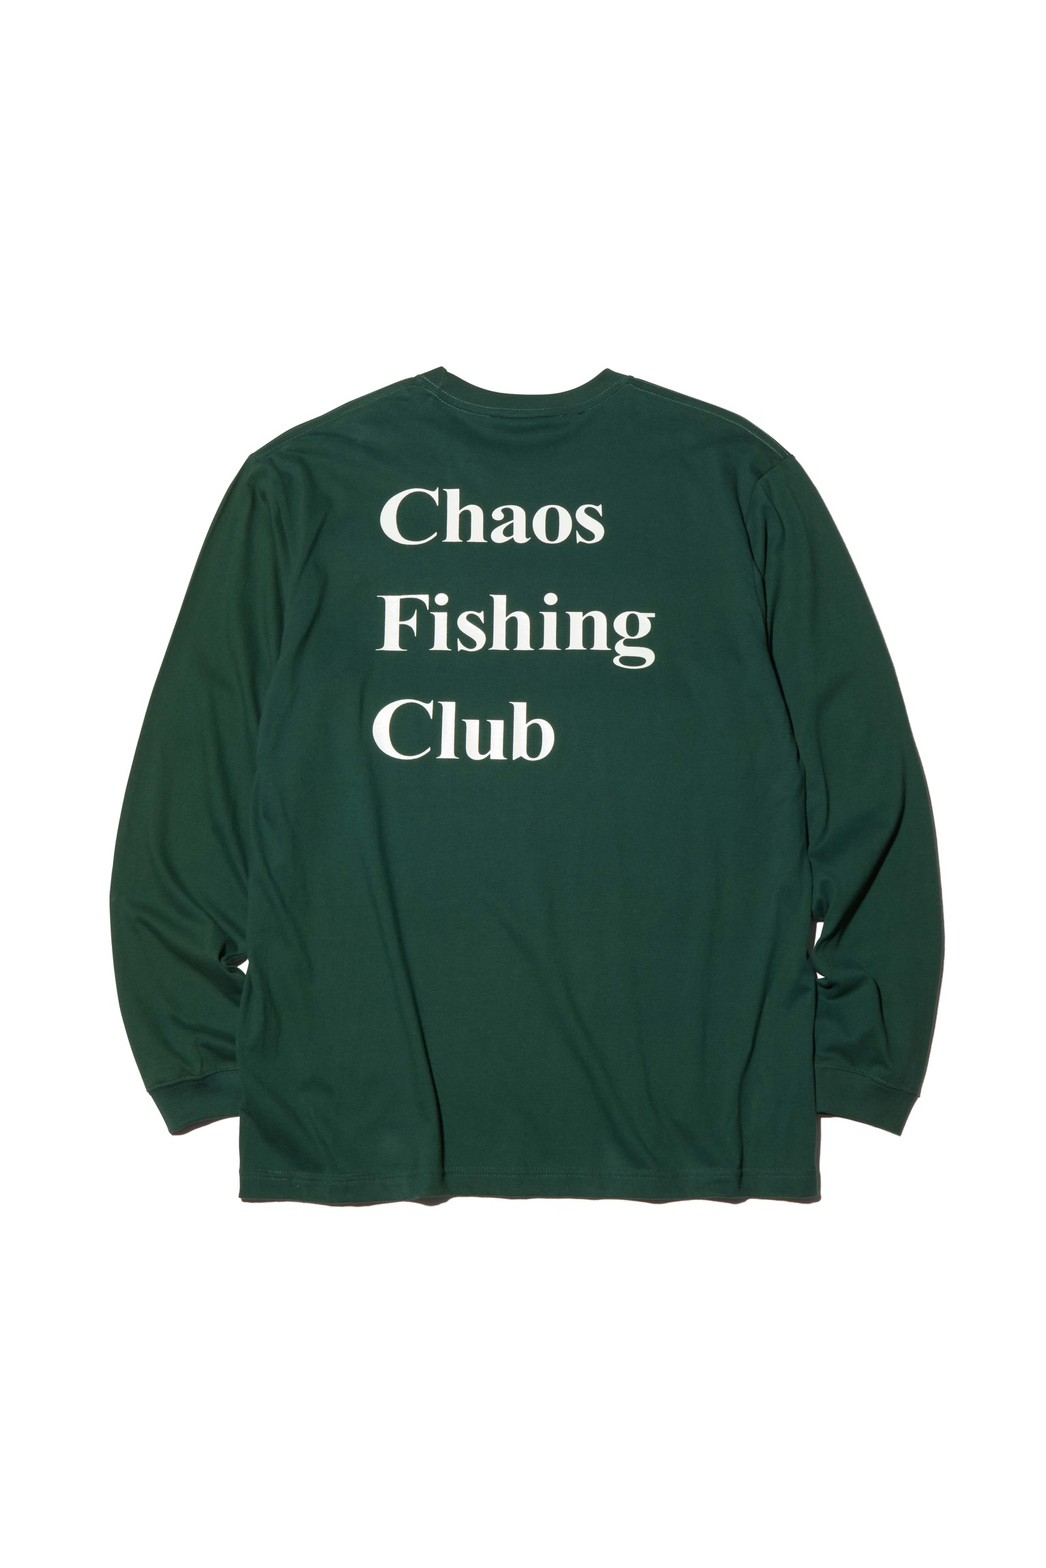 chaos fishingclub GELDISTSPIELZEUGWALLET